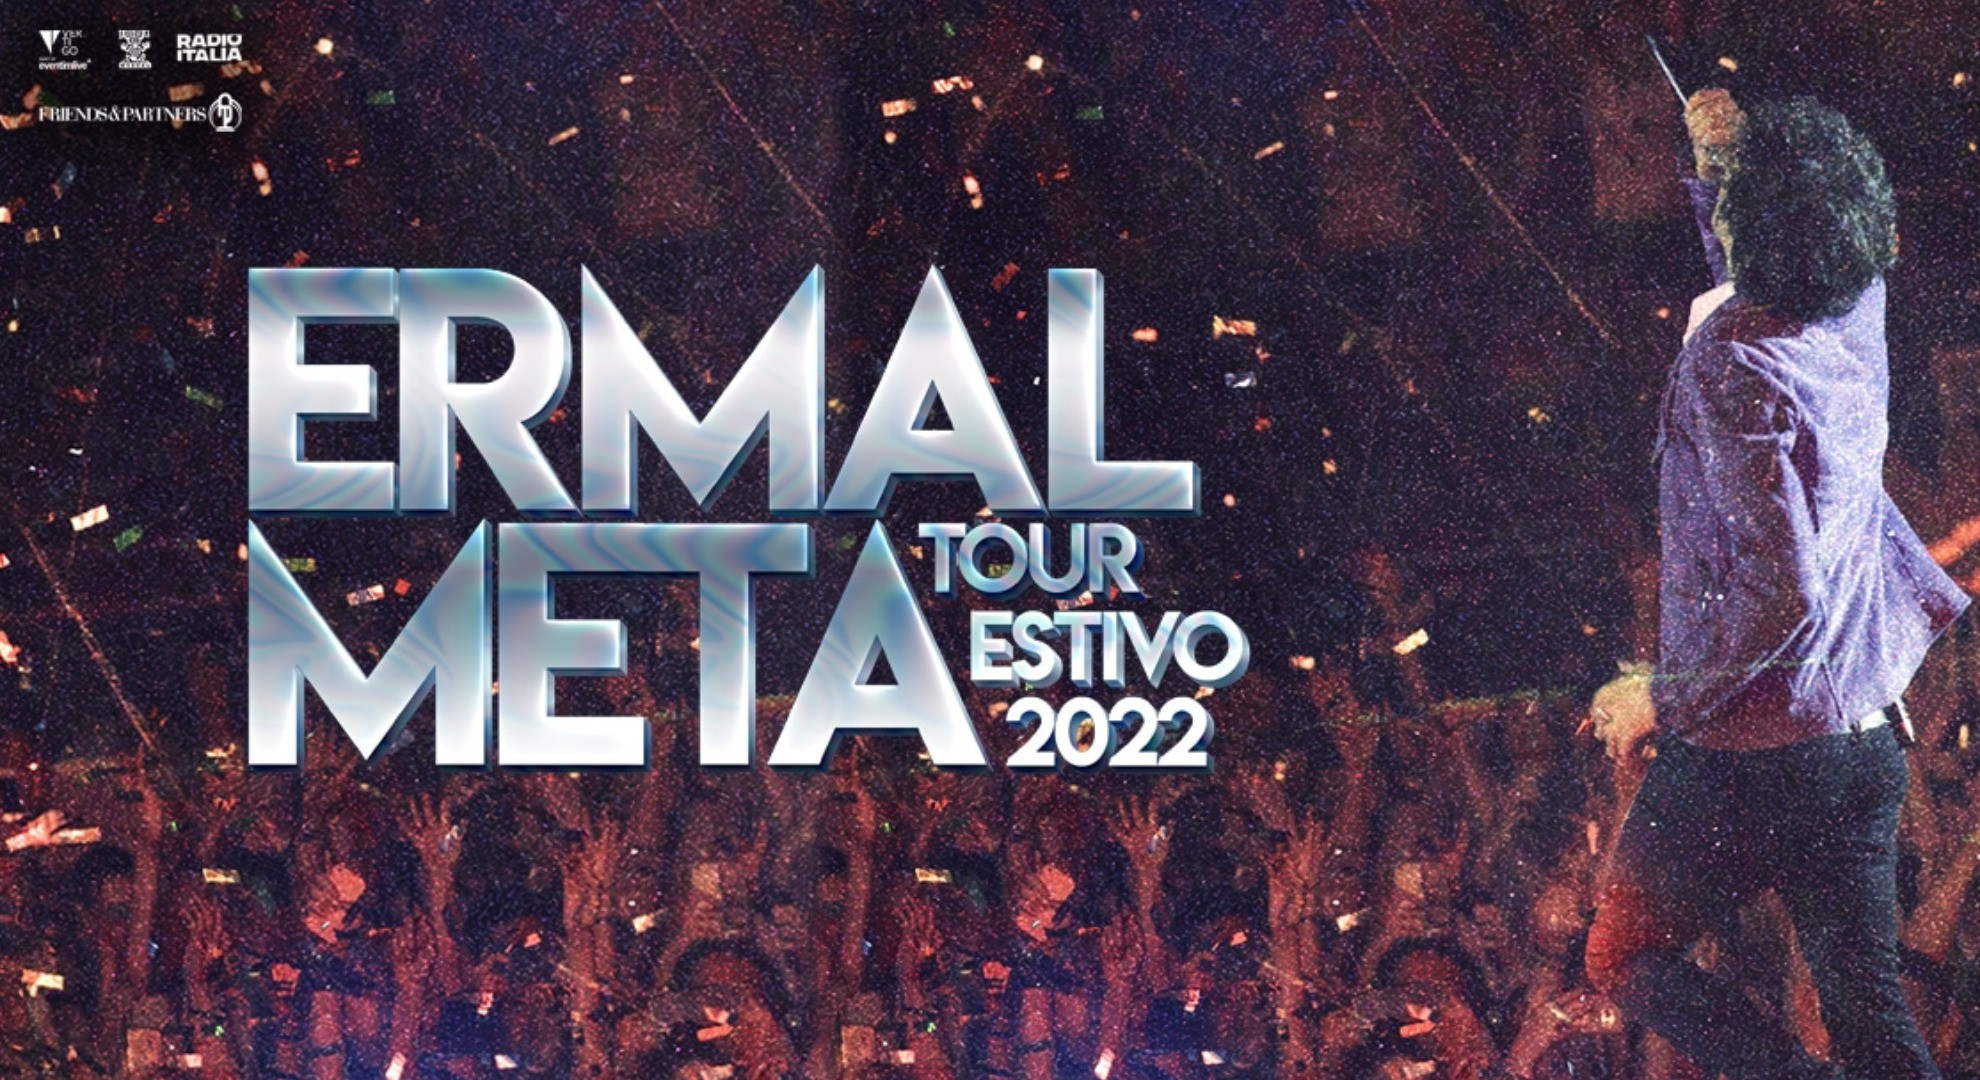 ERMAL META - Evento online esclusivo - 17/05/2022 - Contest - Mondadori  Store